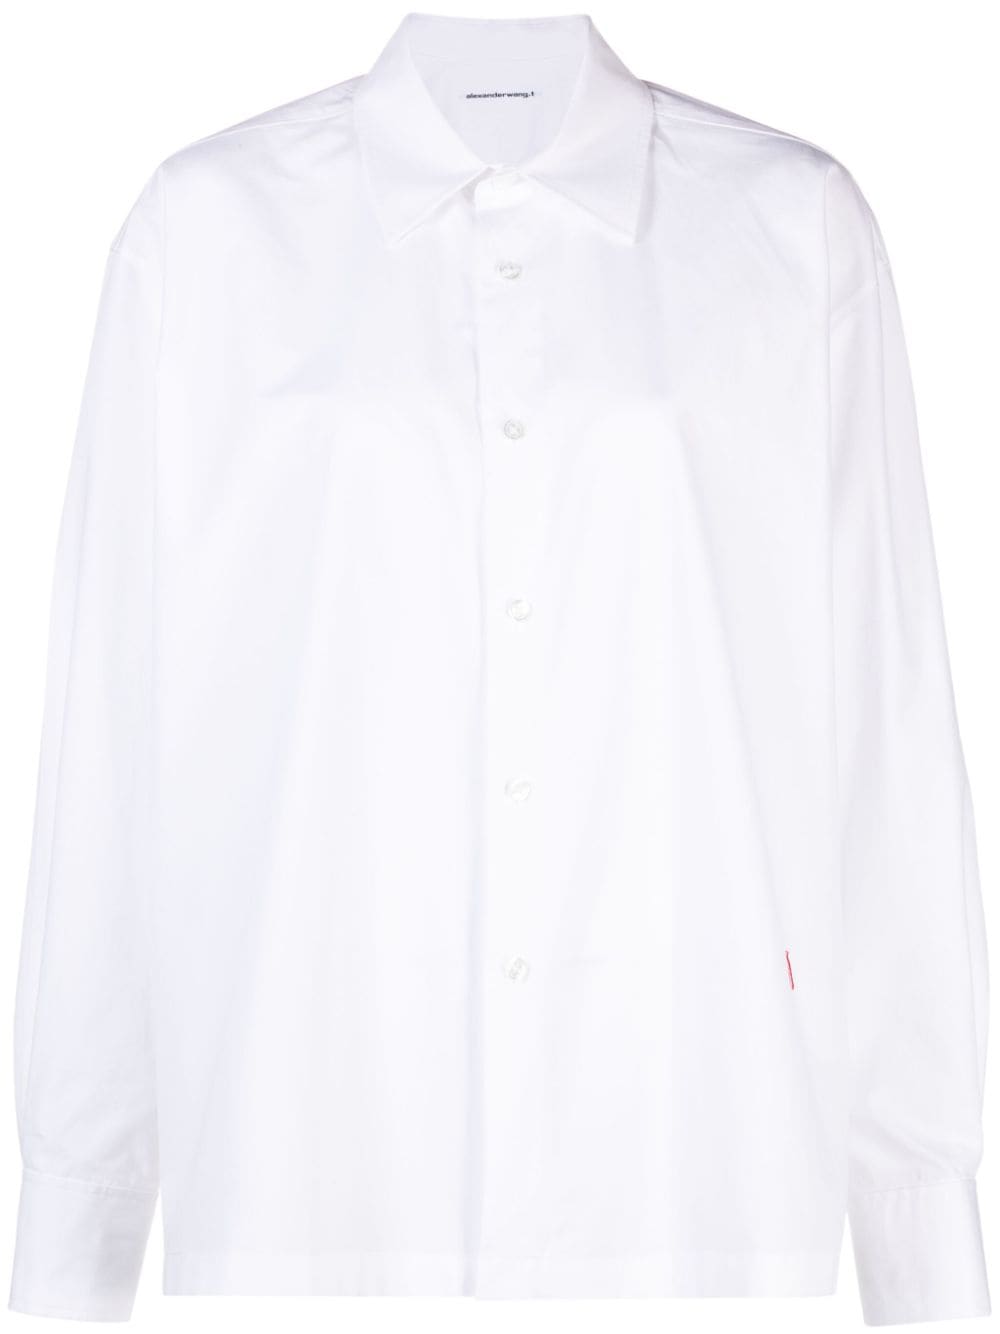 Image 1 of Alexander Wang logo-appliqué cotton shirt